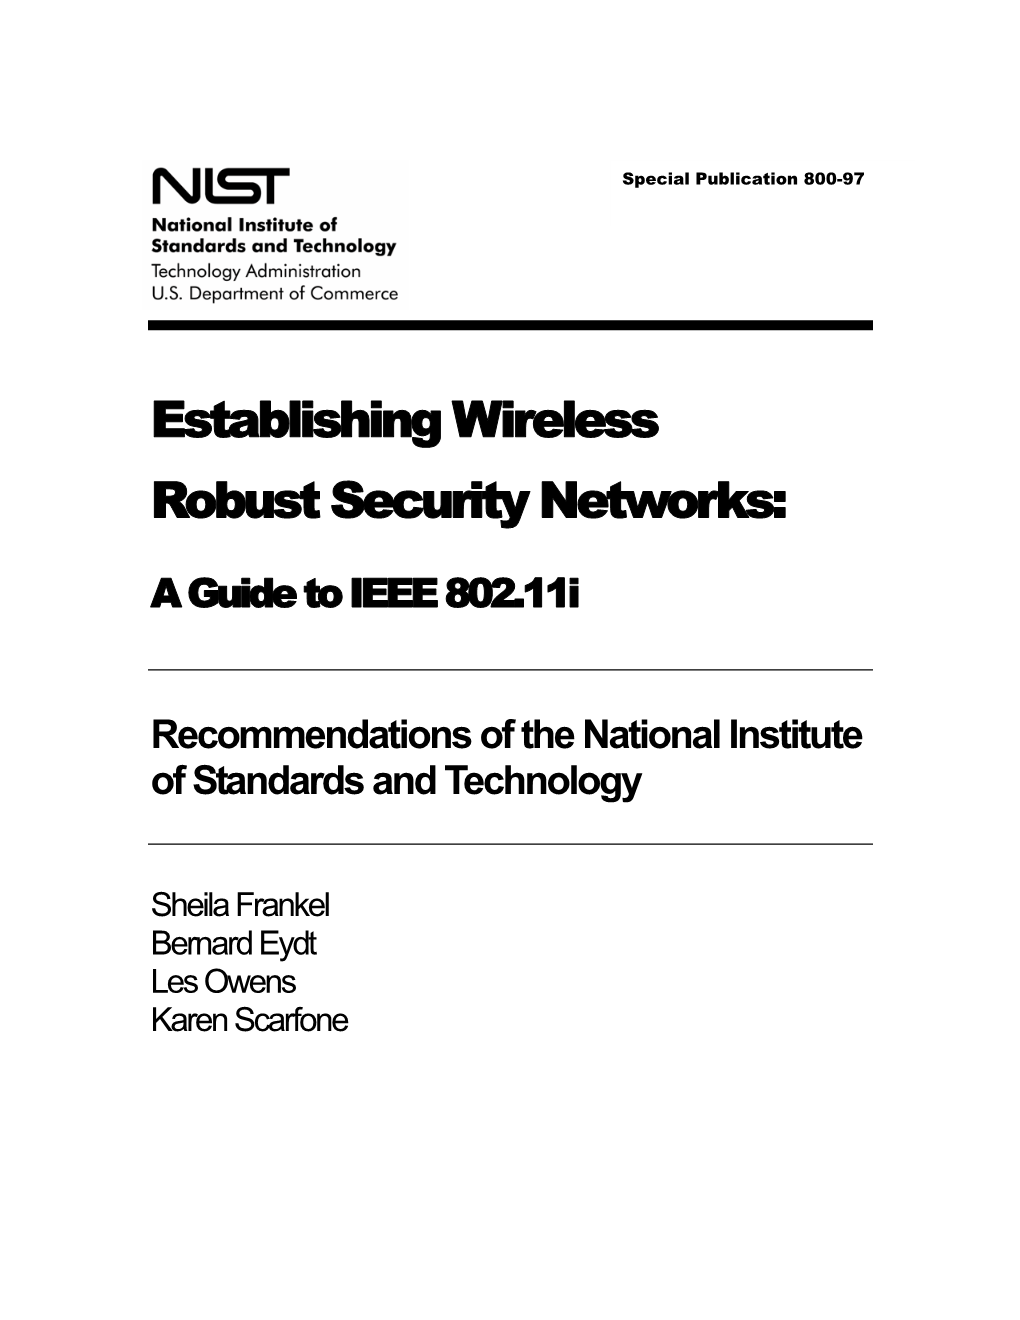 NIST SP 800-97, Establishing Wireless Robust Security Networks